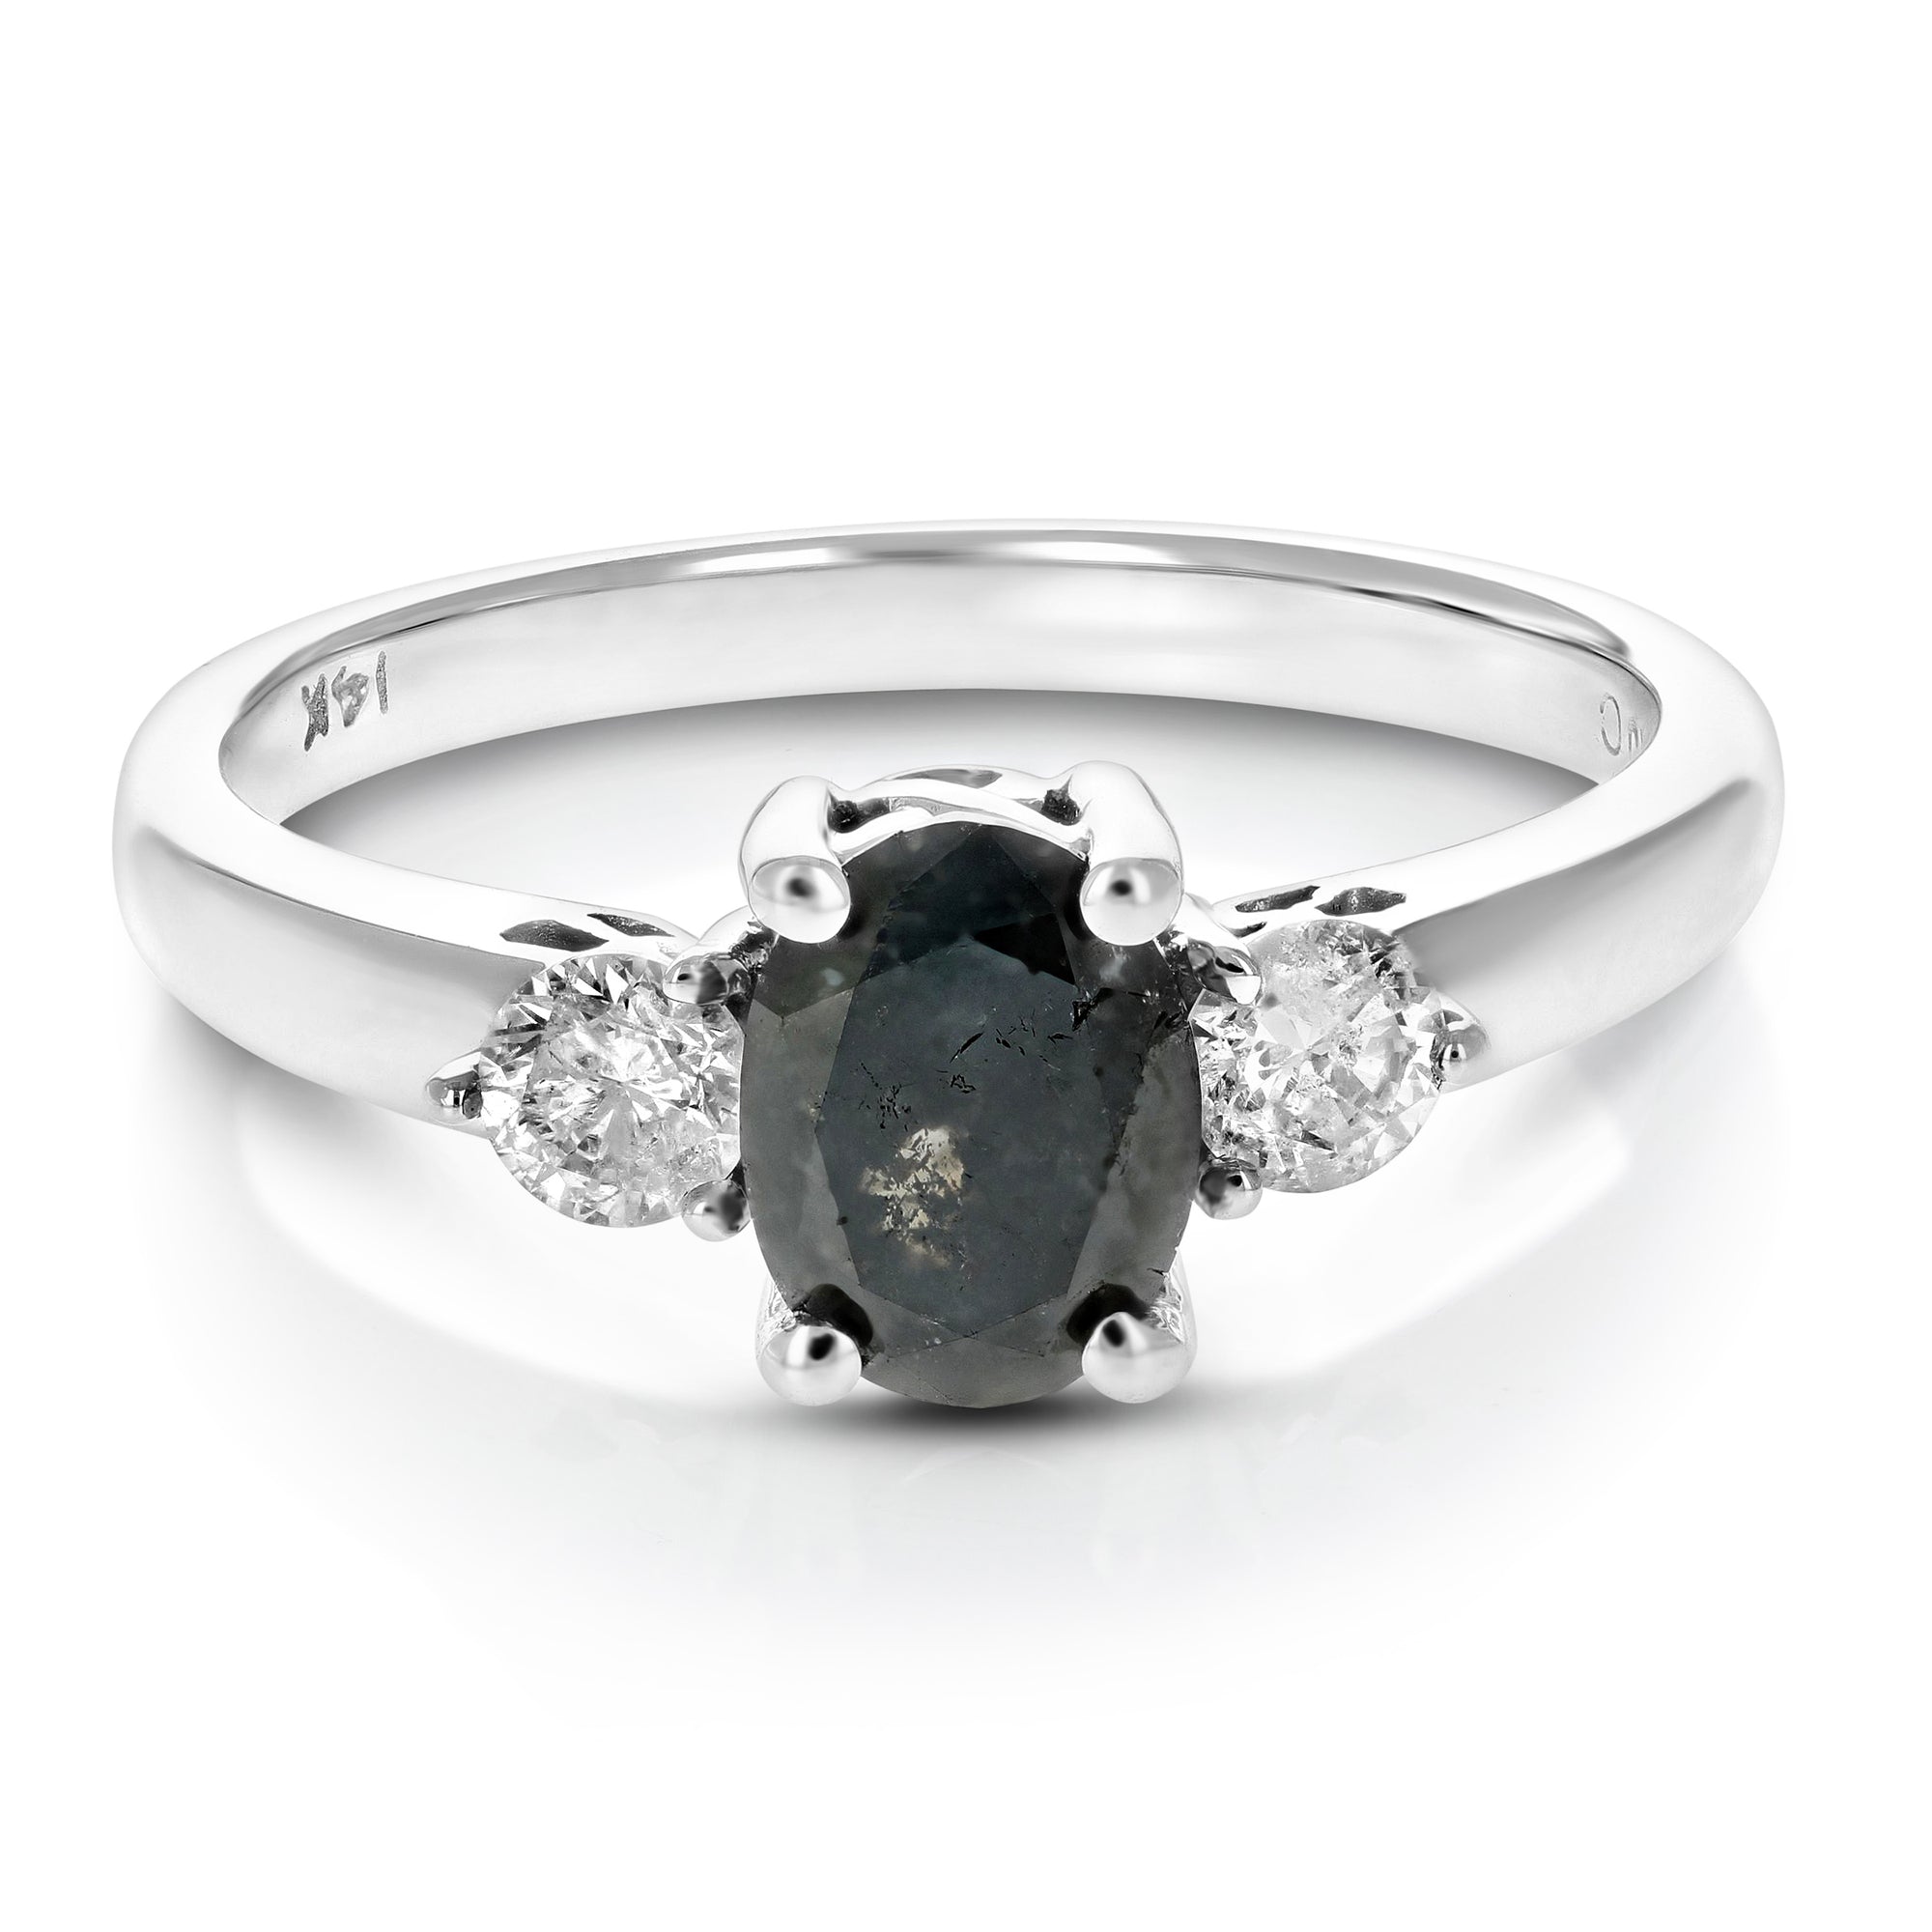 1.93 cttw Black Diamond 3 Stone Ring 14K White Gold Engagement Size 6.5